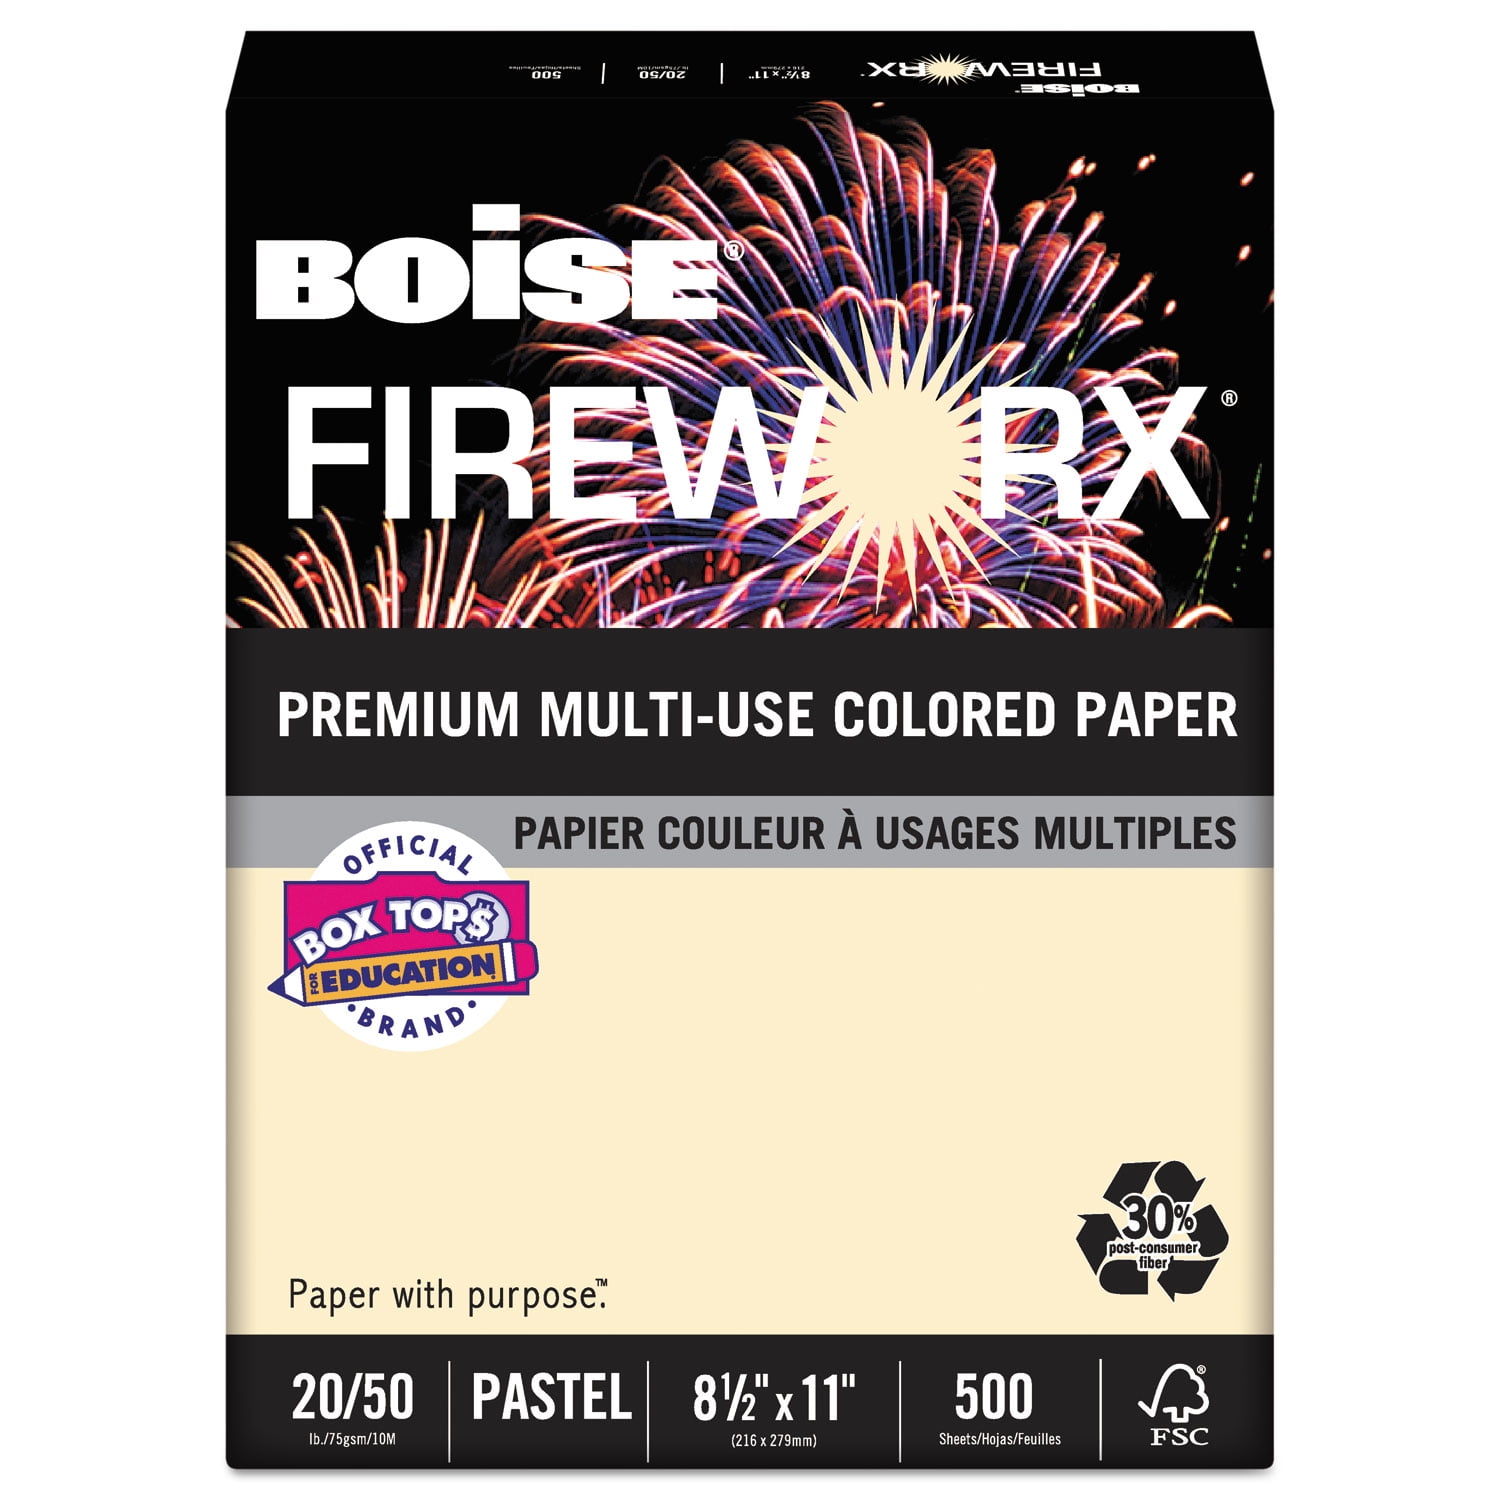 Flashing Ivory 8.5 x 11 500 Sheets Boise Fireworx Color Copy/Laser Paper MP2201-IY 20 lb Letter Size 